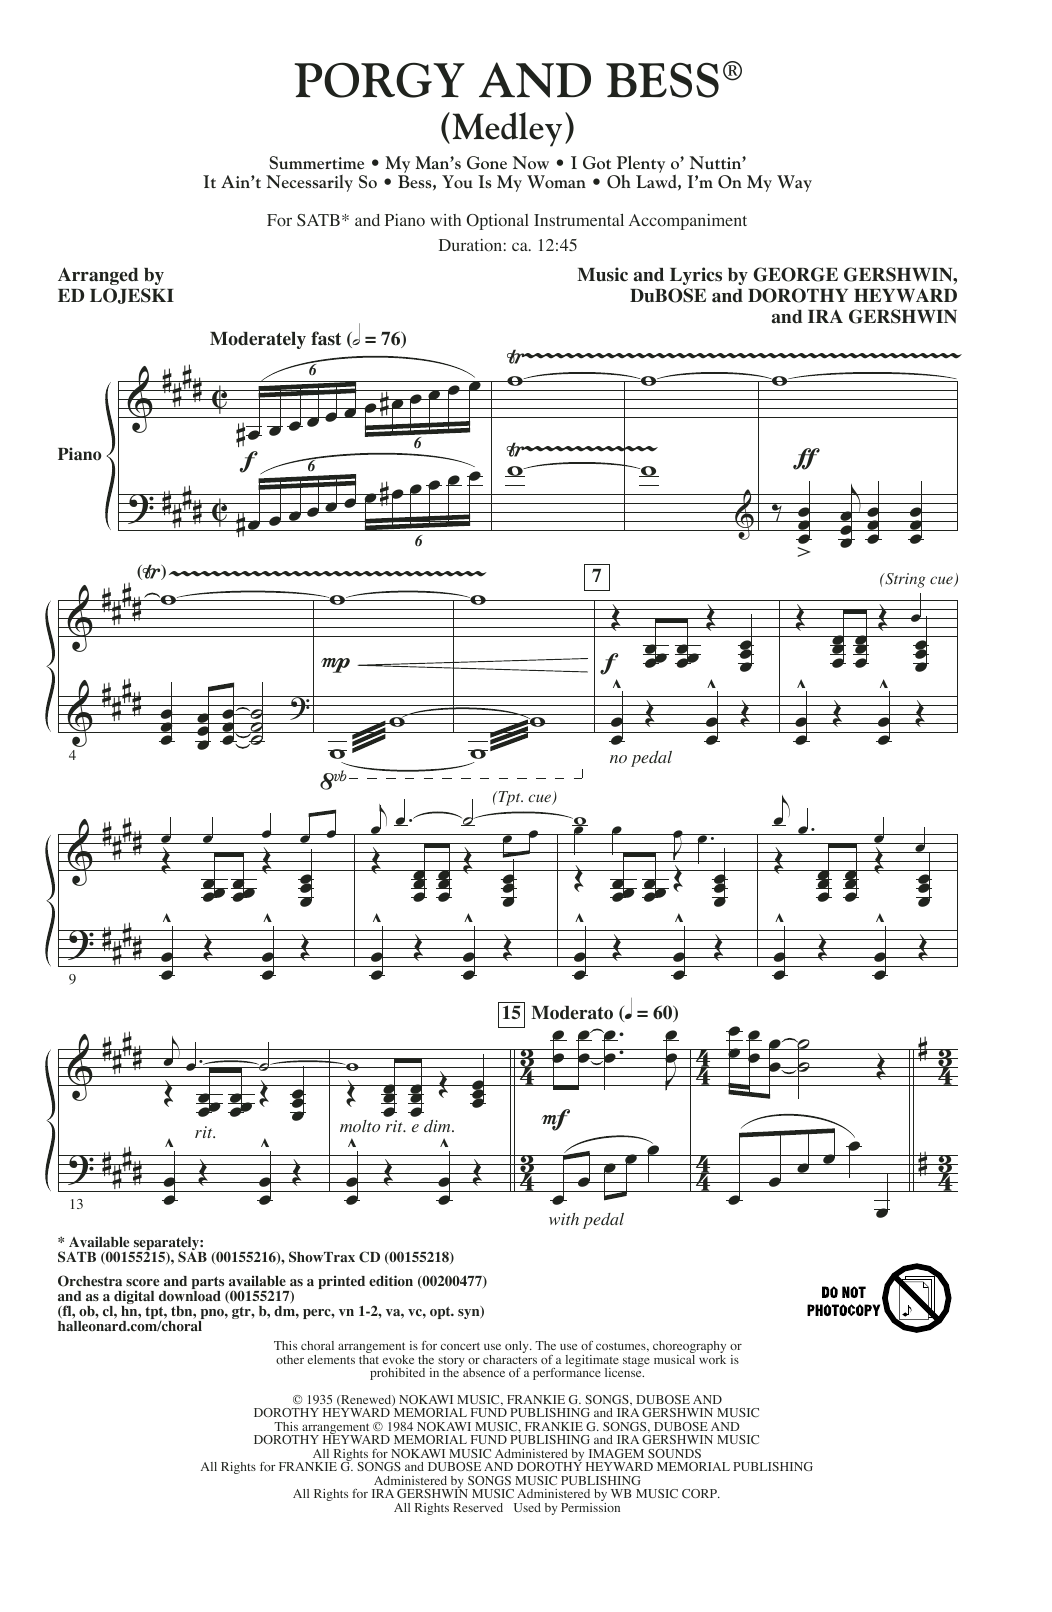 Ed Lojeski Porgy And Bess (Medley) Sheet Music Notes & Chords for SAB - Download or Print PDF